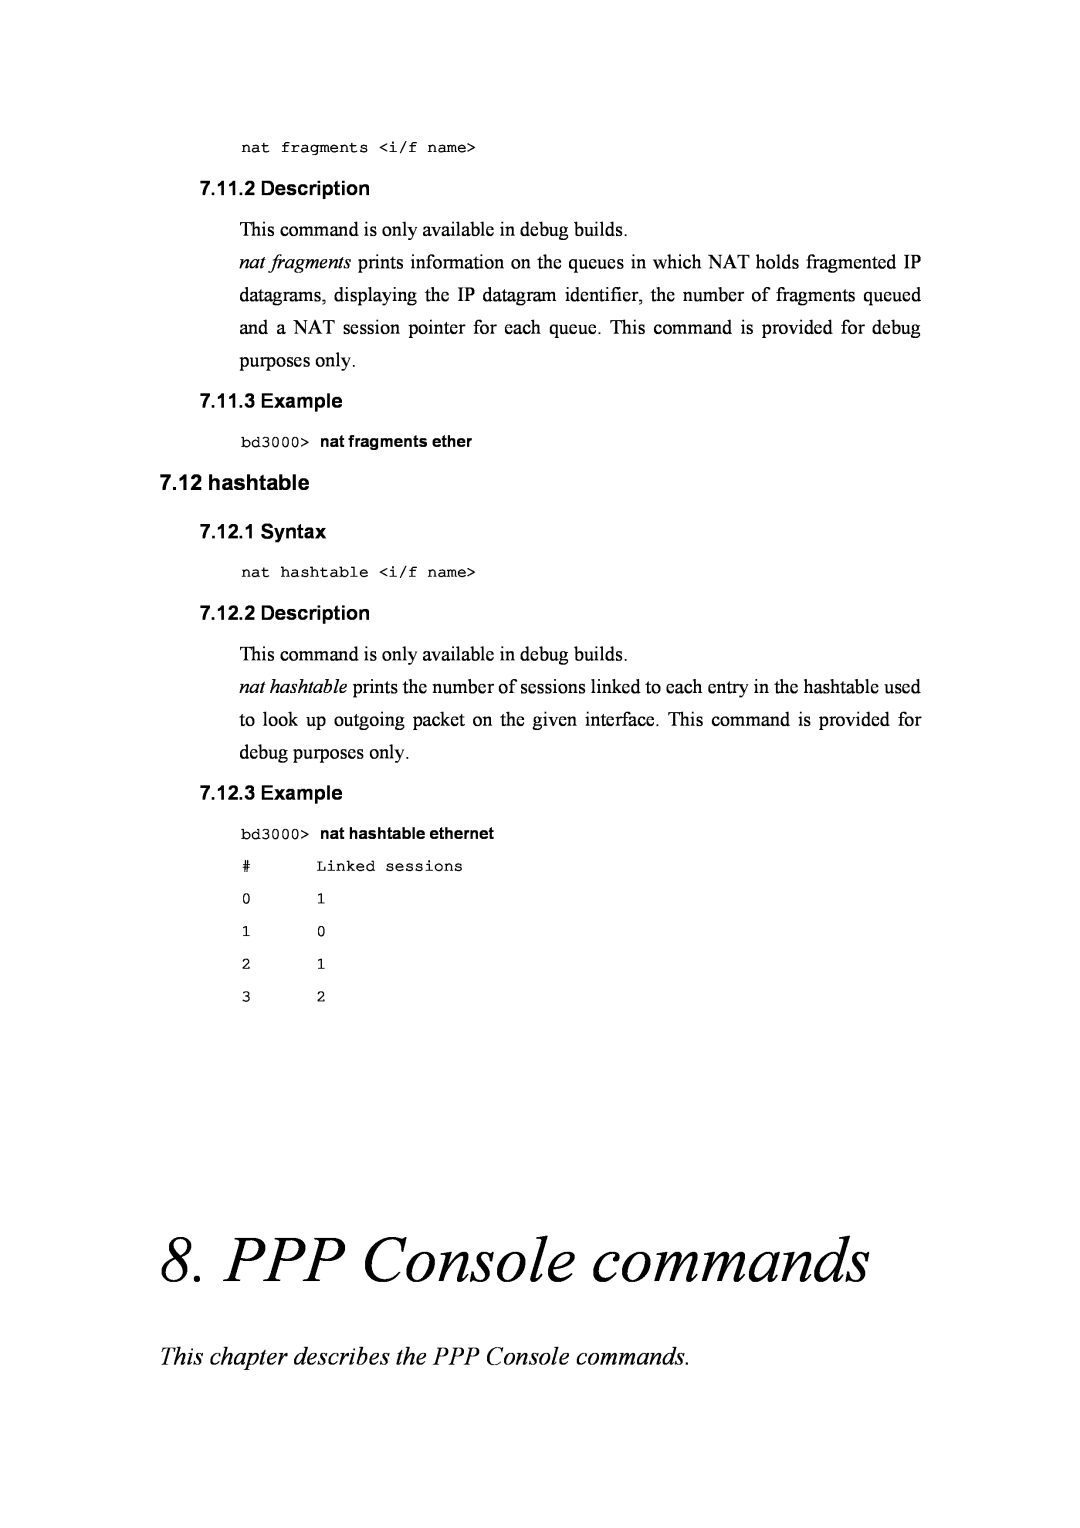 Atlantis Land A02-RA(Atmos)_ME01 This chapter describes the PPP Console commands, hashtable, Description, Example 